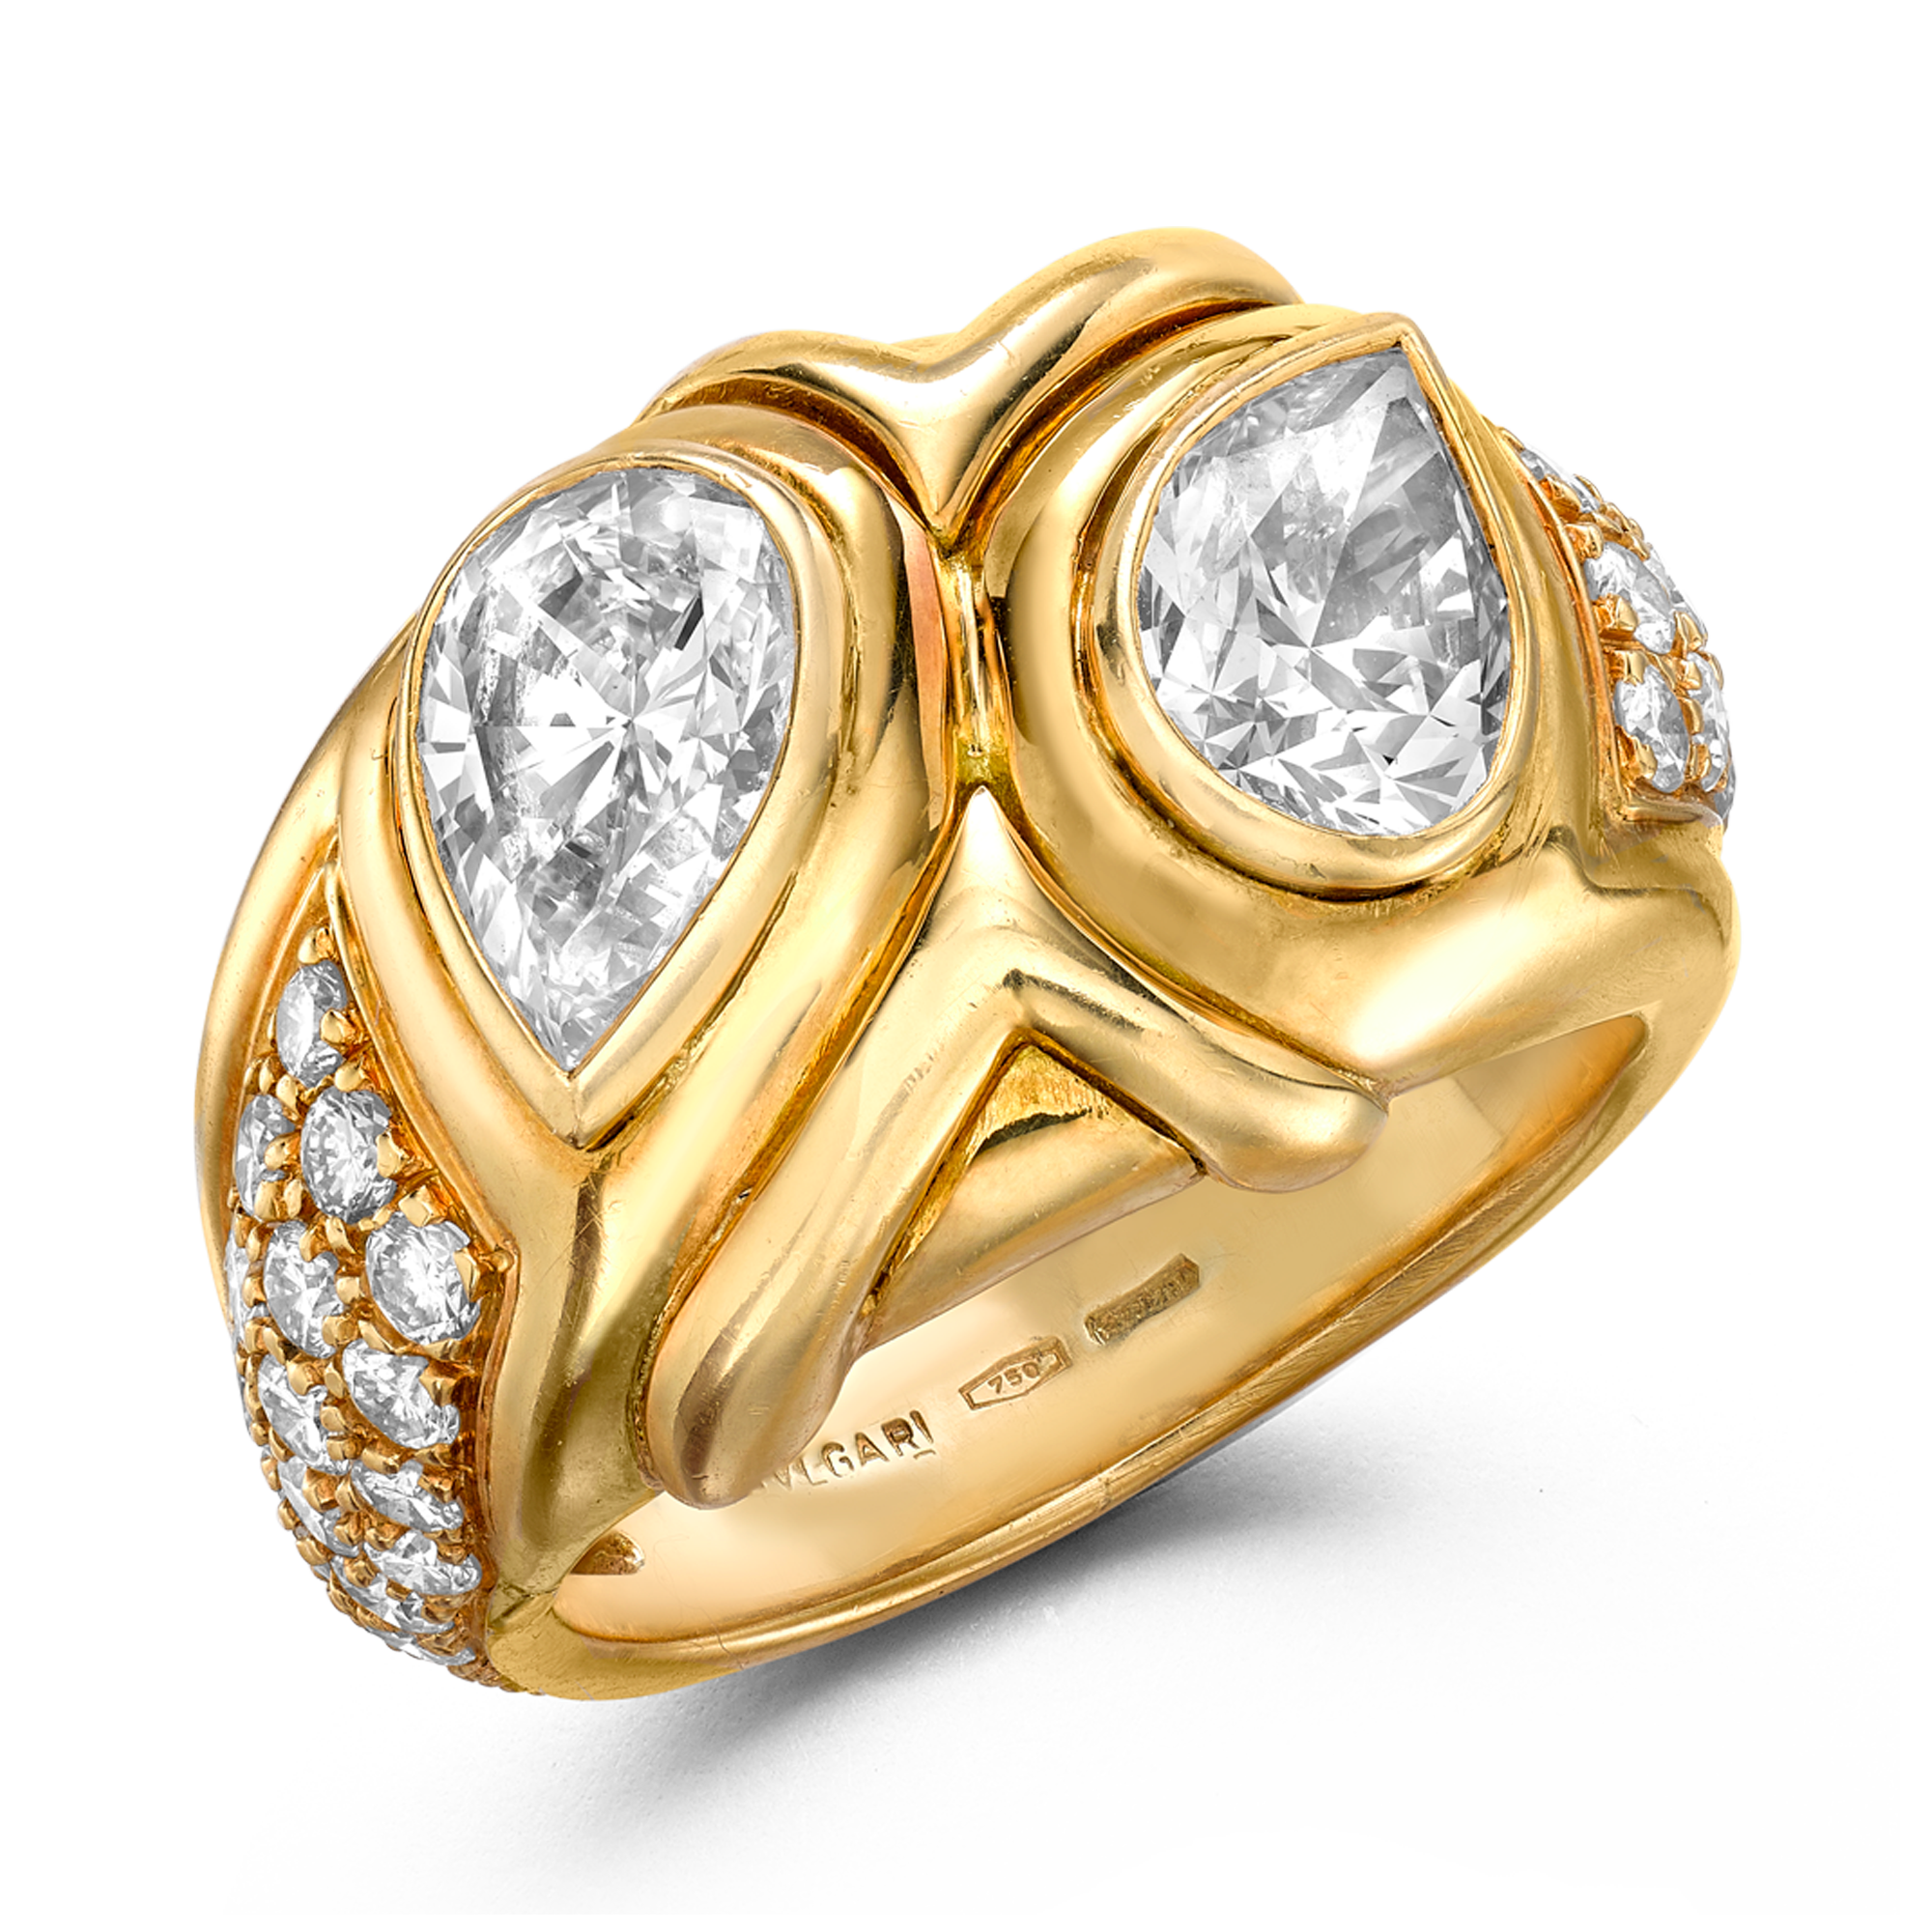 1980s Bvlgari Diamond Ring Pear Cut Dress Ring, with Diamond Shoulders_1